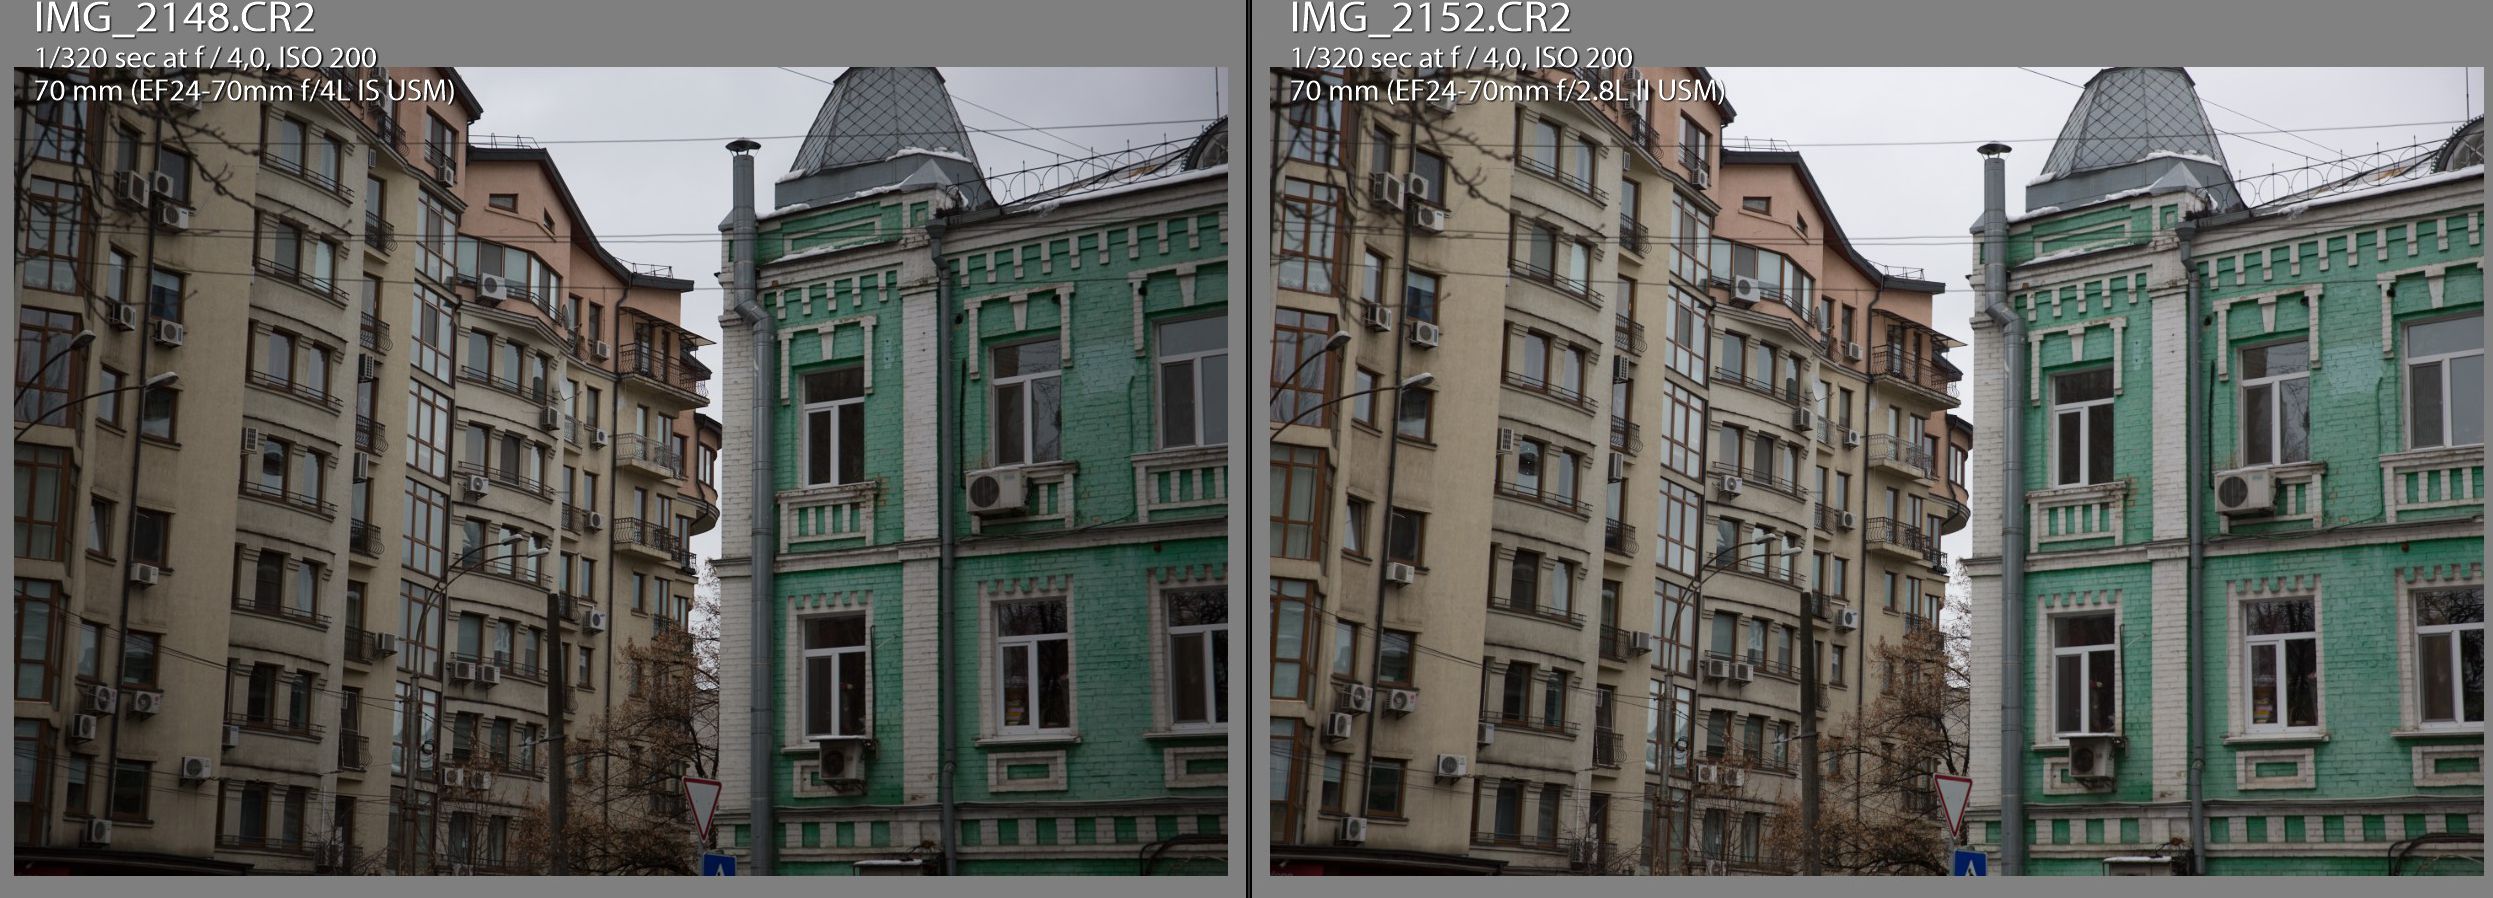 Canon EF 24-70 f4L IS USM vs. Canon EF 24-70 f2.8L II USM review -  Professional photographer's website in Kyiv | Olegas photo